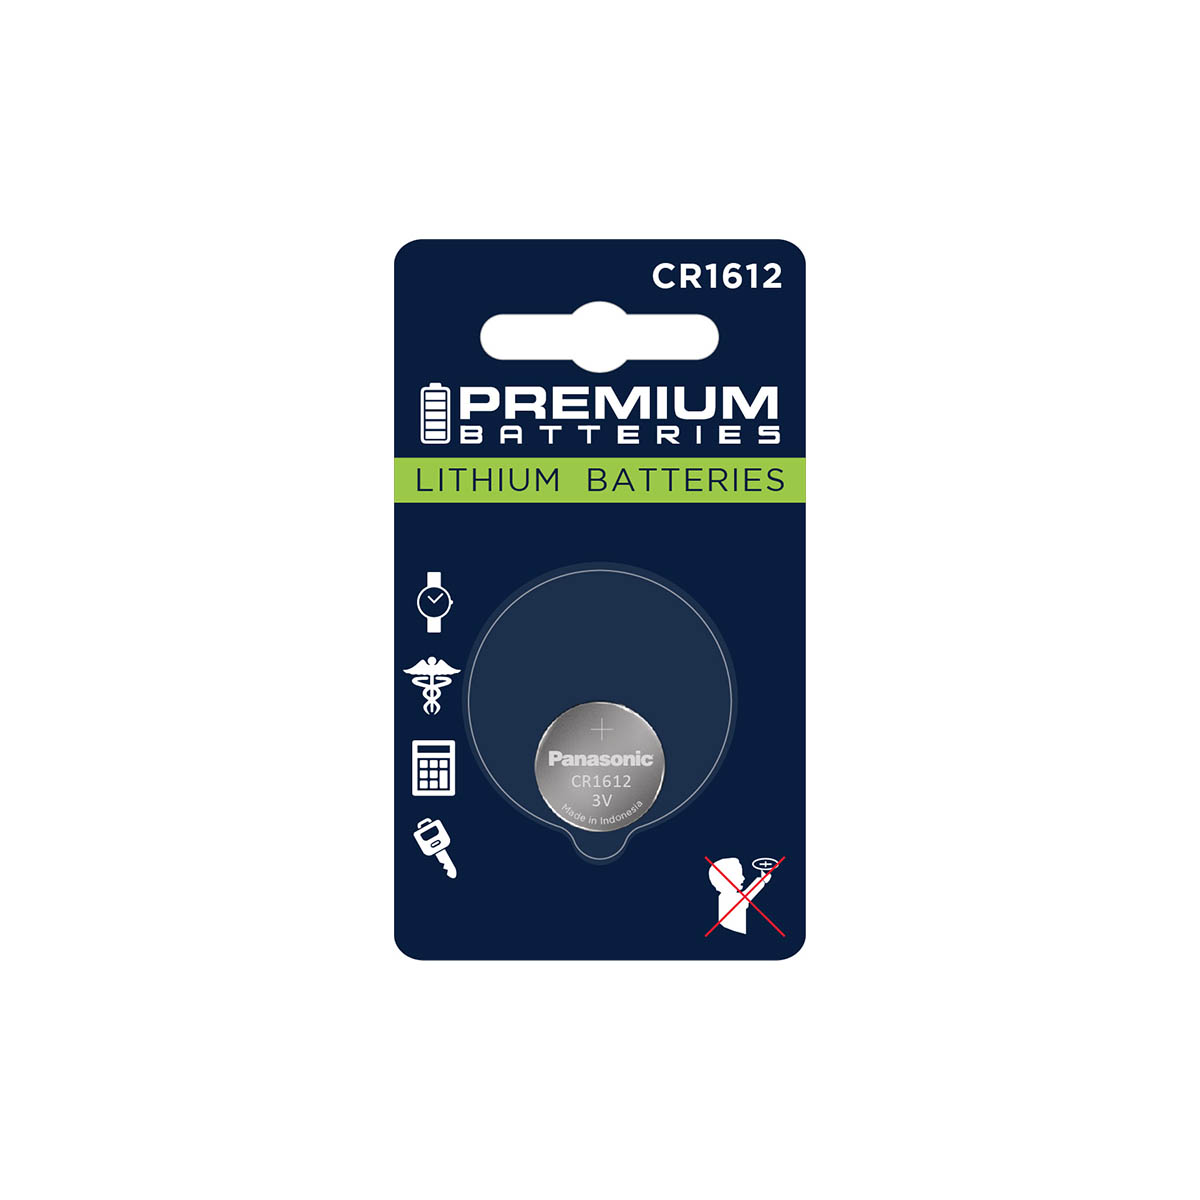 Premium Batteries CR1612 Battery 3V Lithium Coin Cell (1 Panasonic Battery) (Child Resistant Packaging)